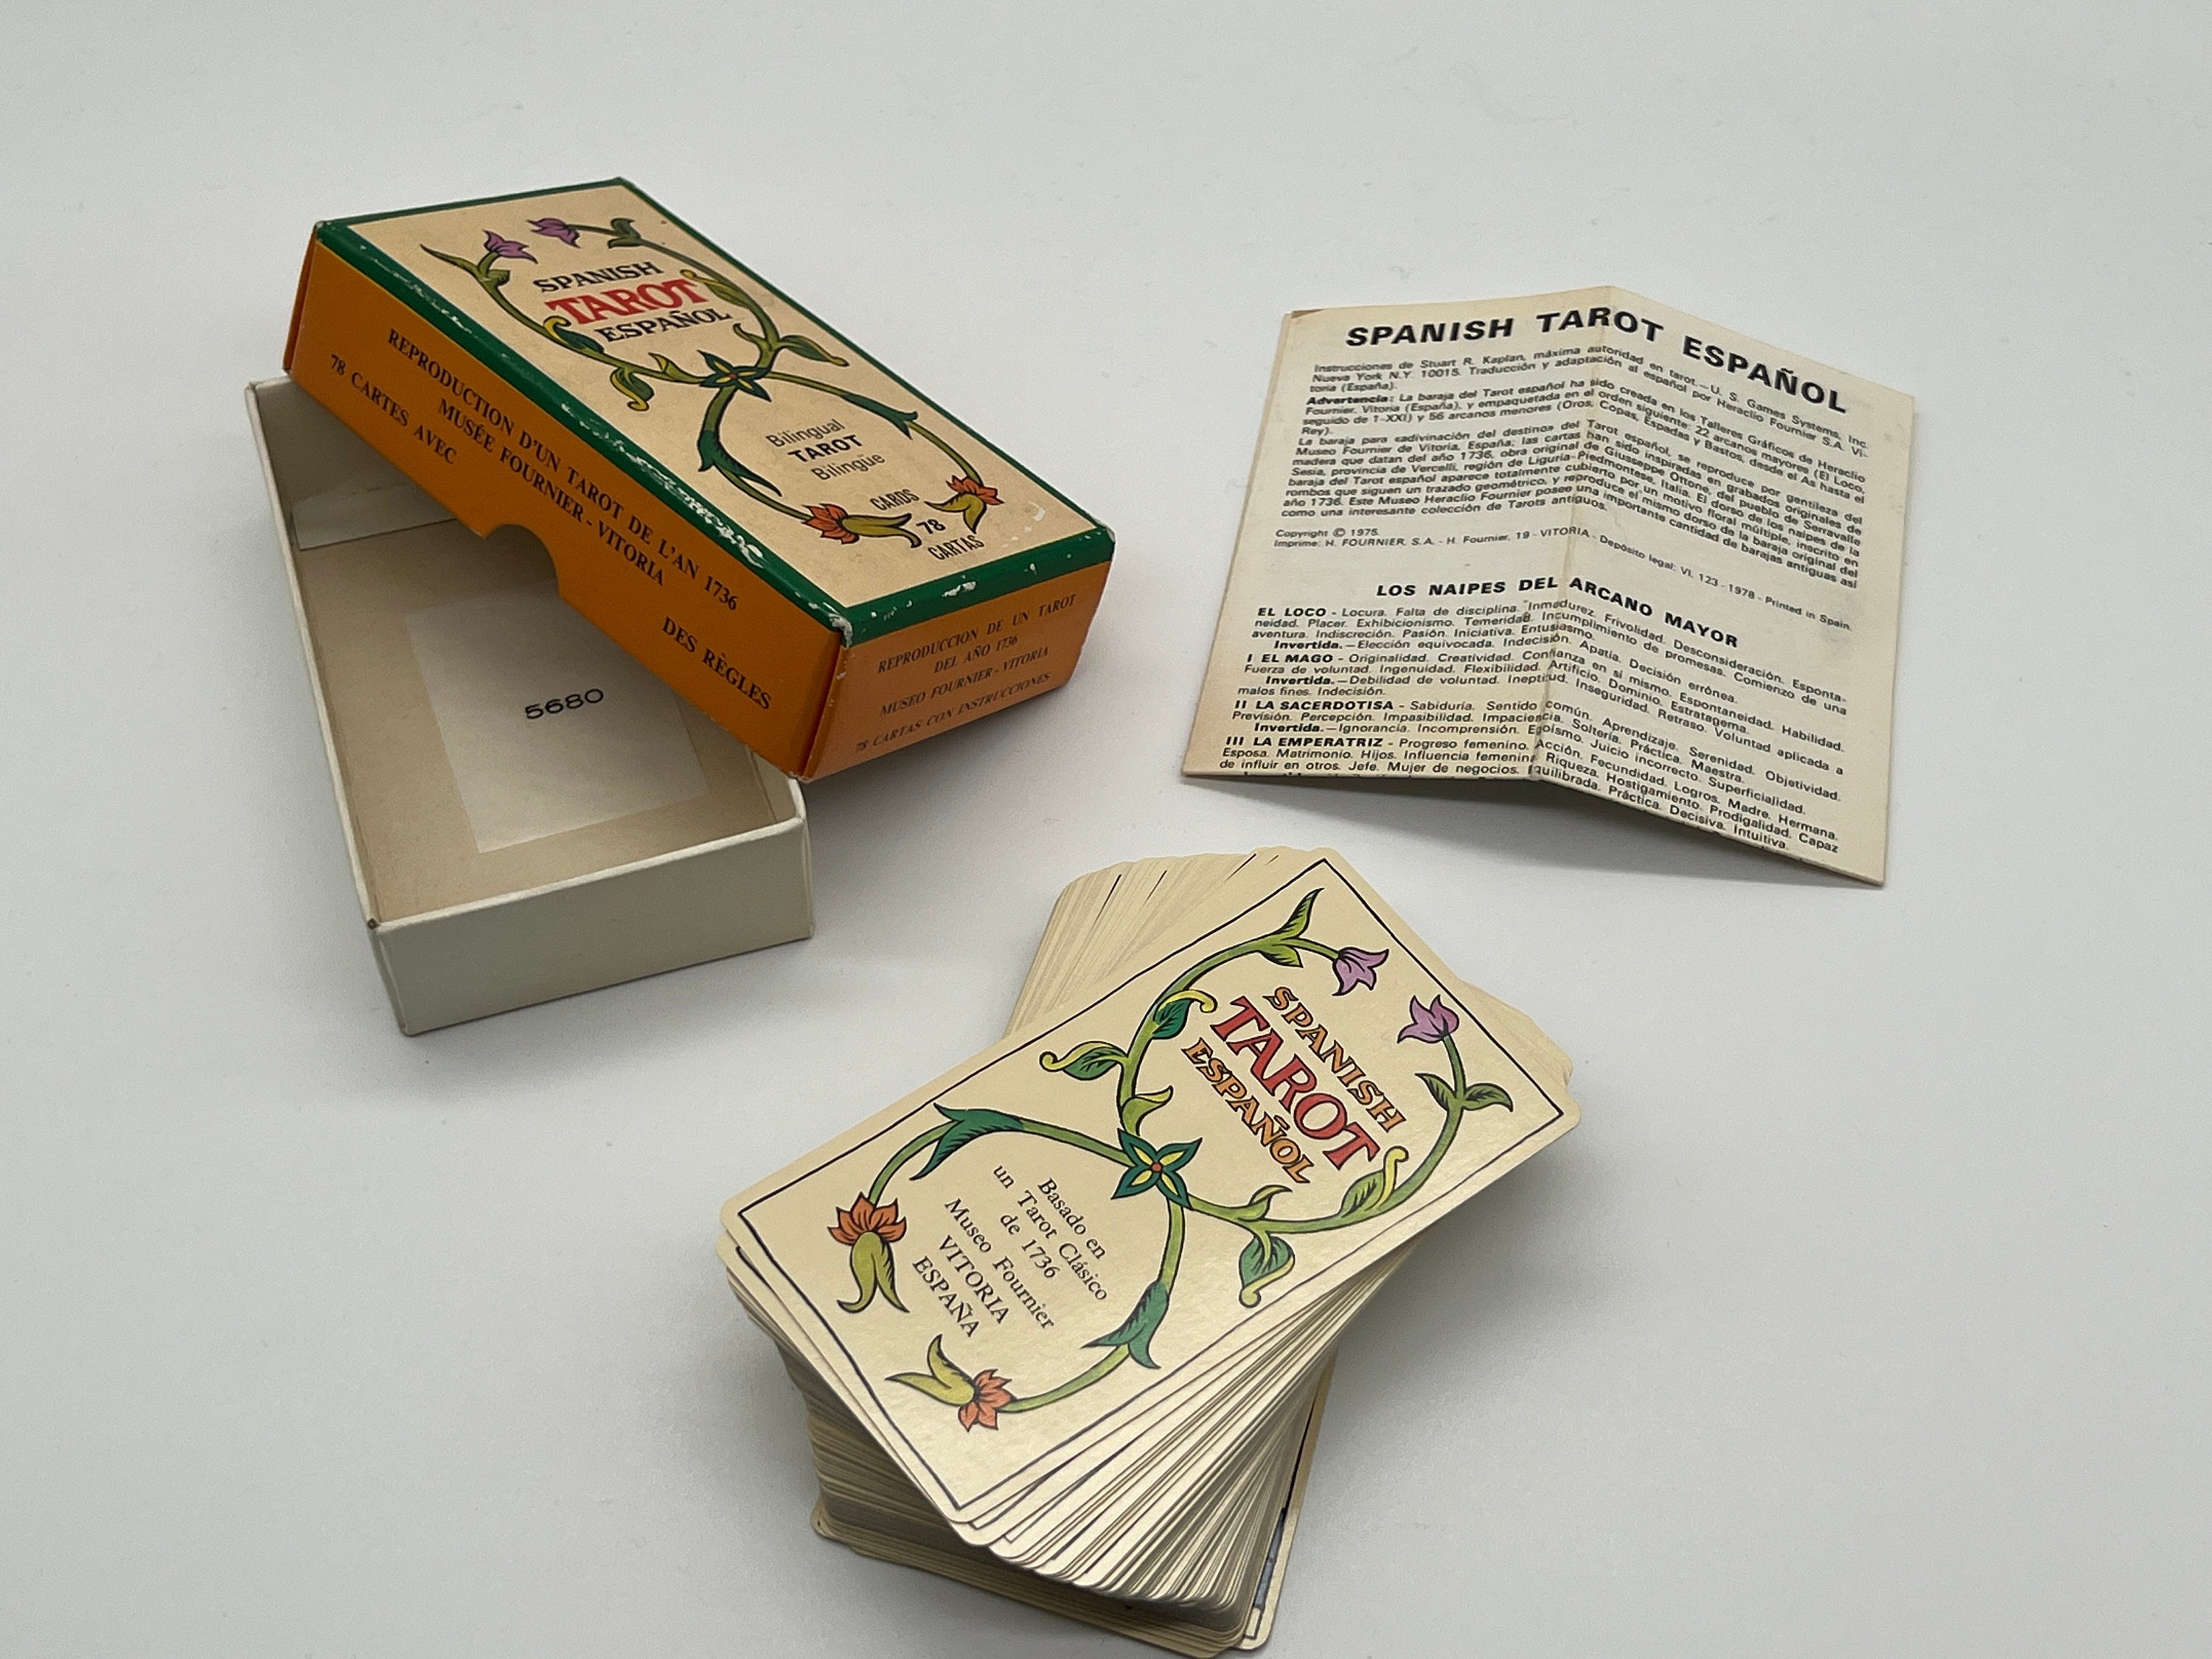 TAROT ESPAÑOL - HERACLIO FOURNIER original fabricado en España - 78 cartas  color EUR 27,25 - PicClick FR